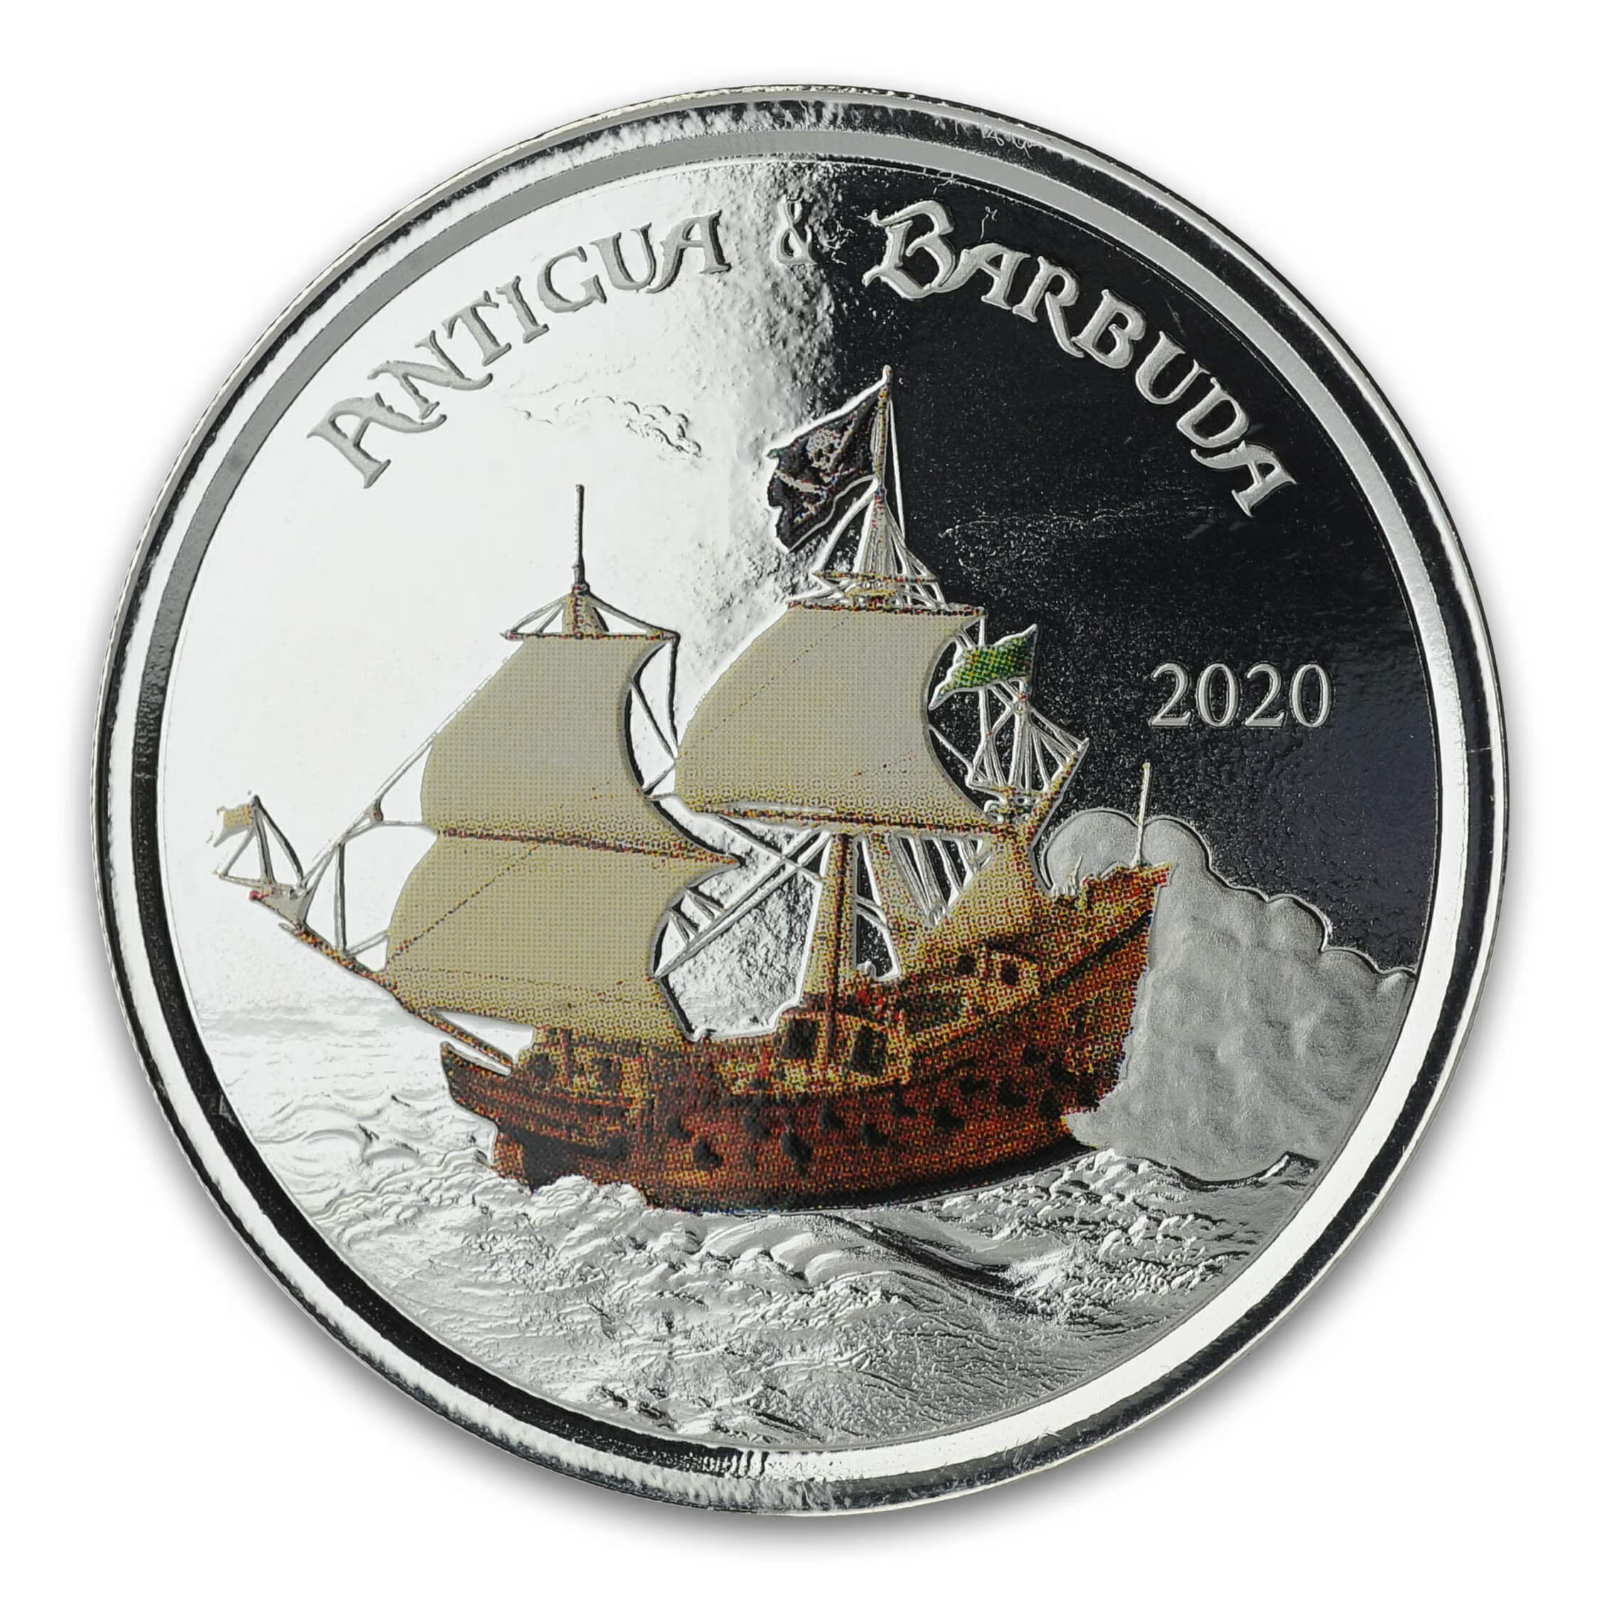 1 Oz Silver Coin 2020 EC8 Antigua & Barbuda $2 Scottsdale Color Proof Rum Runner-classypw.com-1